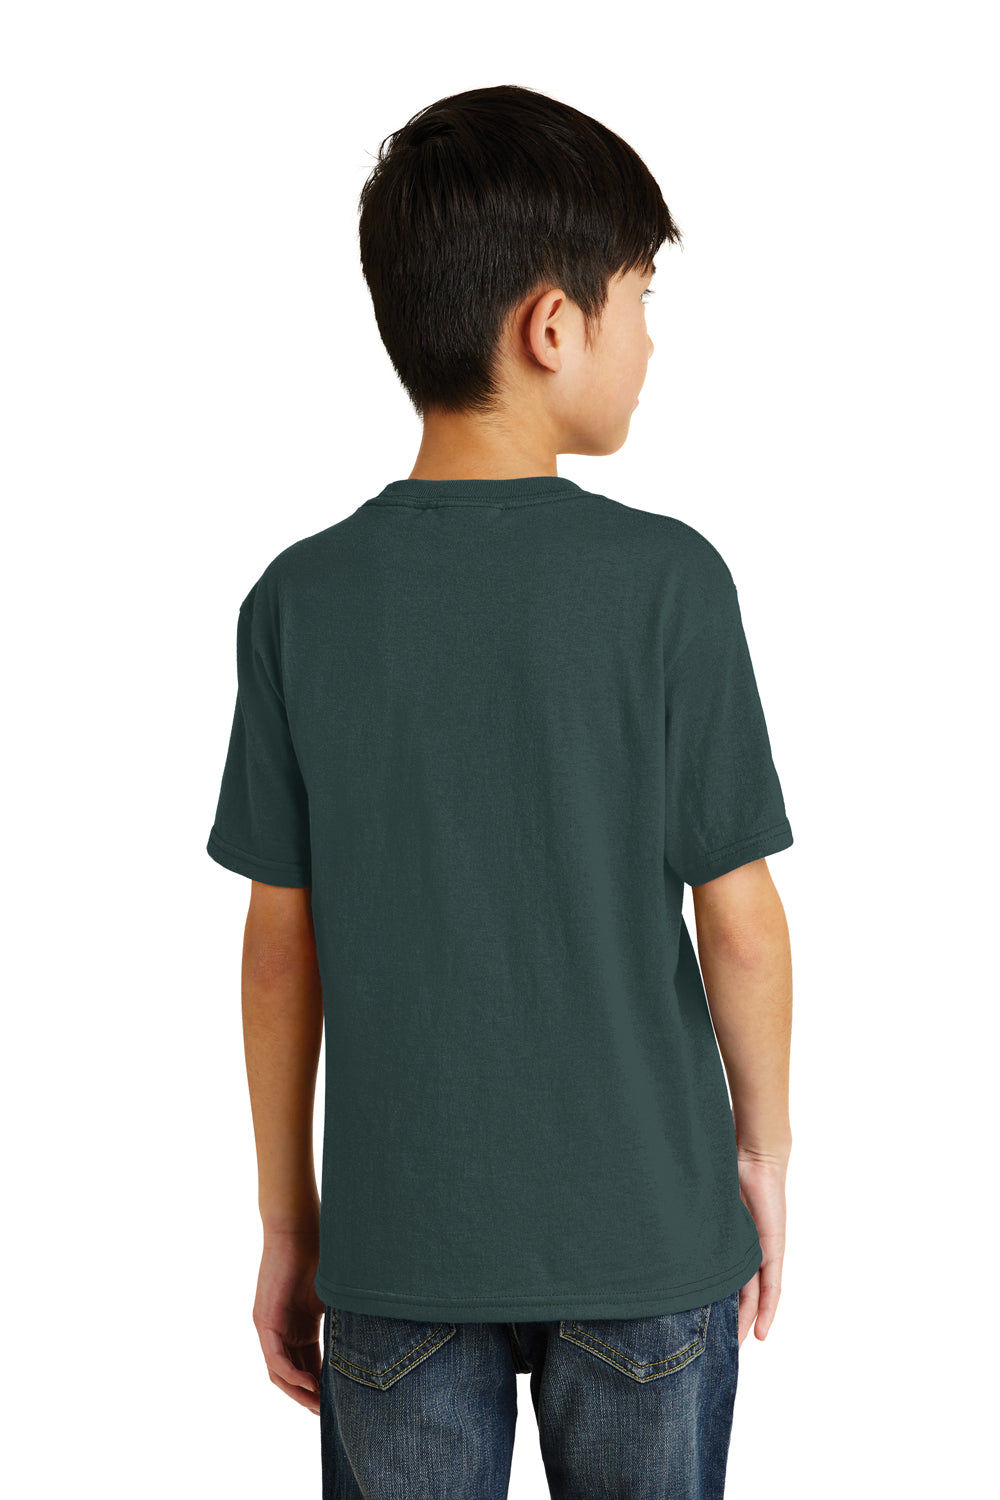 Port & Company PC55Y Youth Core Short Sleeve Crewneck T-Shirt Dark Green Back